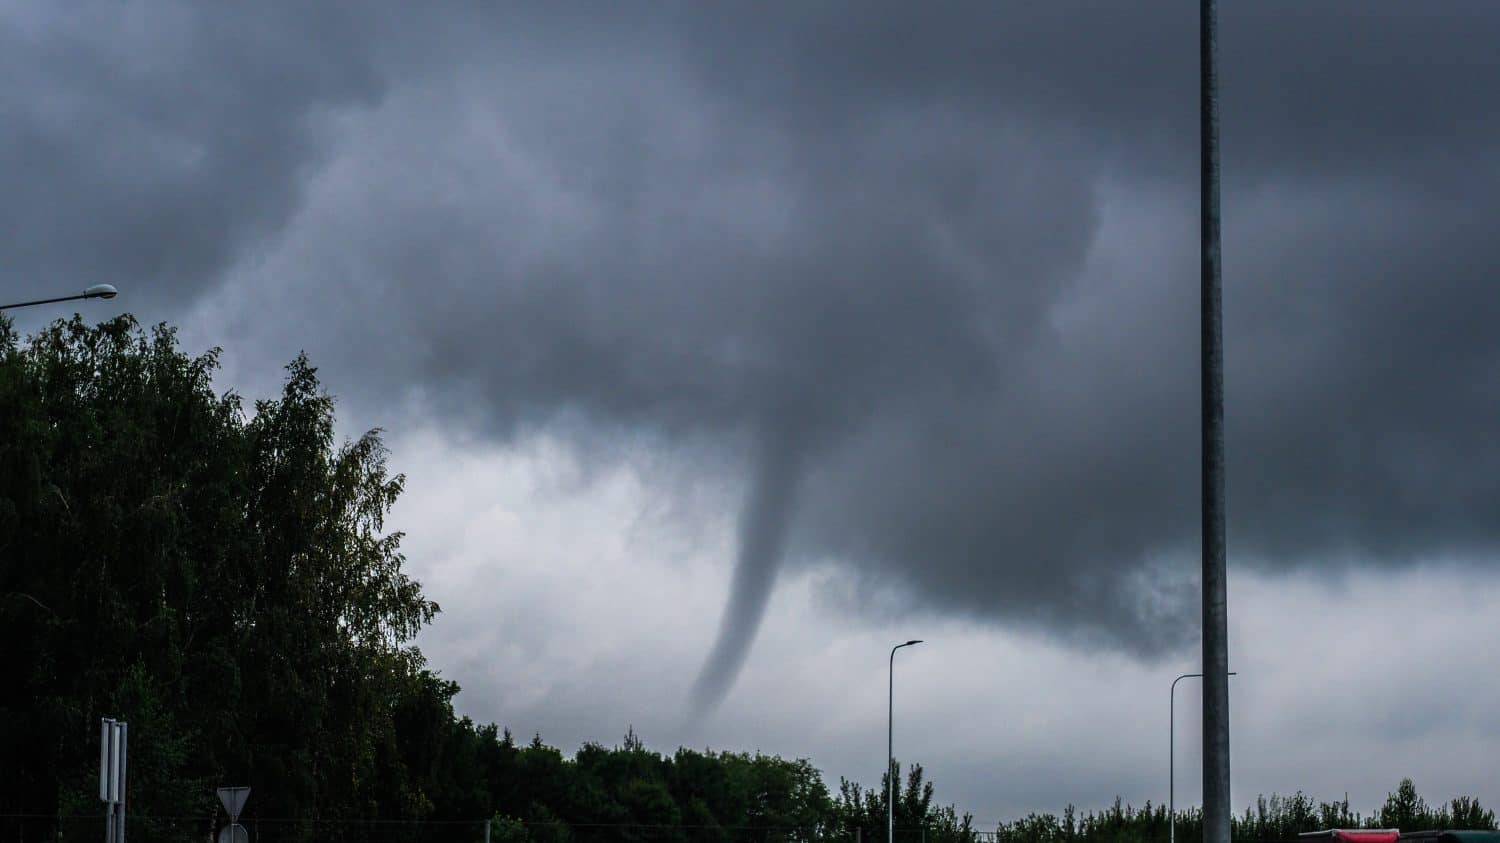 Kaunas, Lithuania - 08 20 2017: Small tornado. Whirlwind. Hurricane. Storm. Very unusual natural phenomenon in Northern Europe.